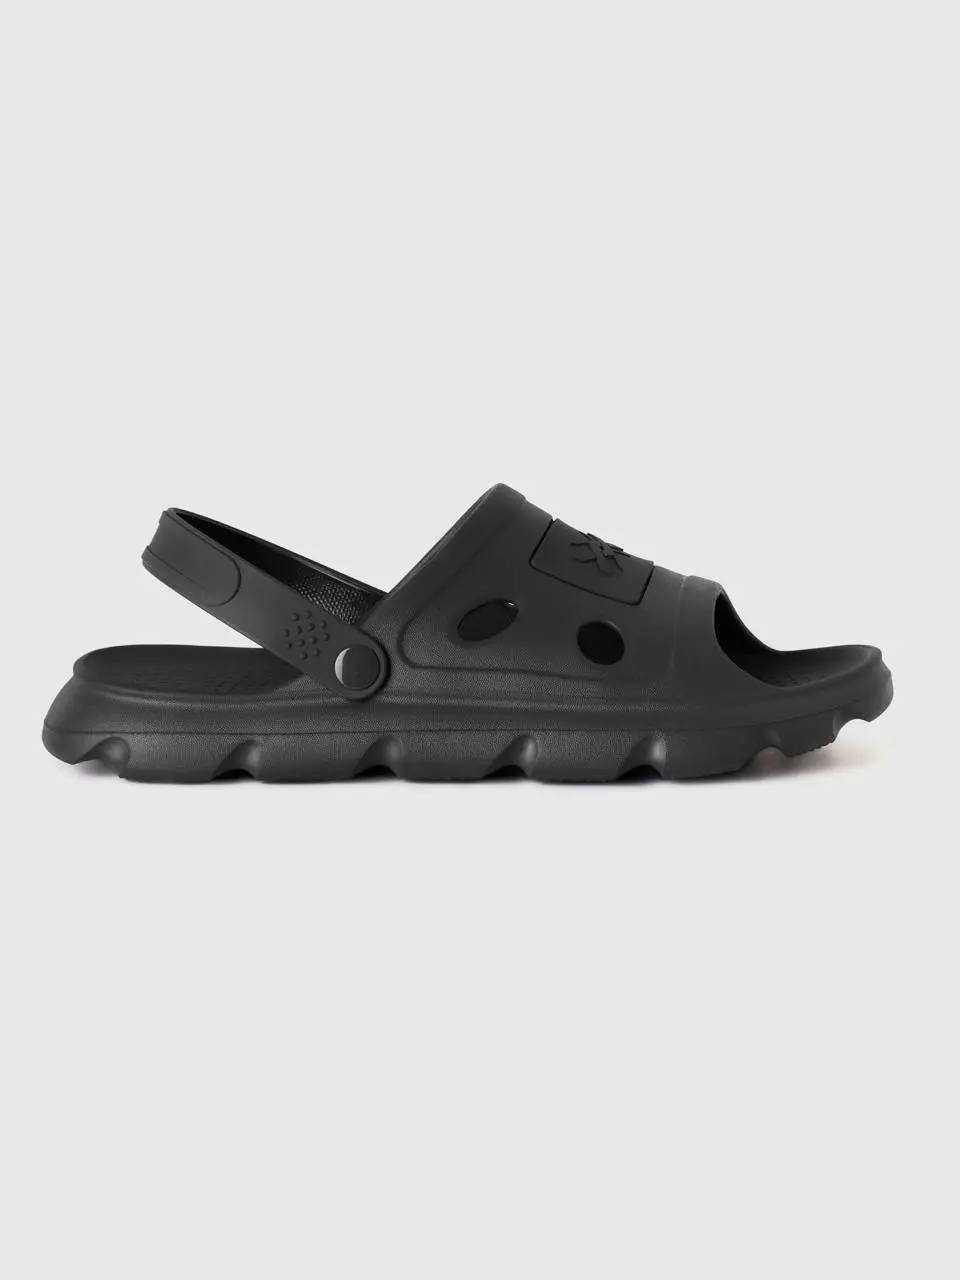 Benetton black sandals in lightweight rubber. 1